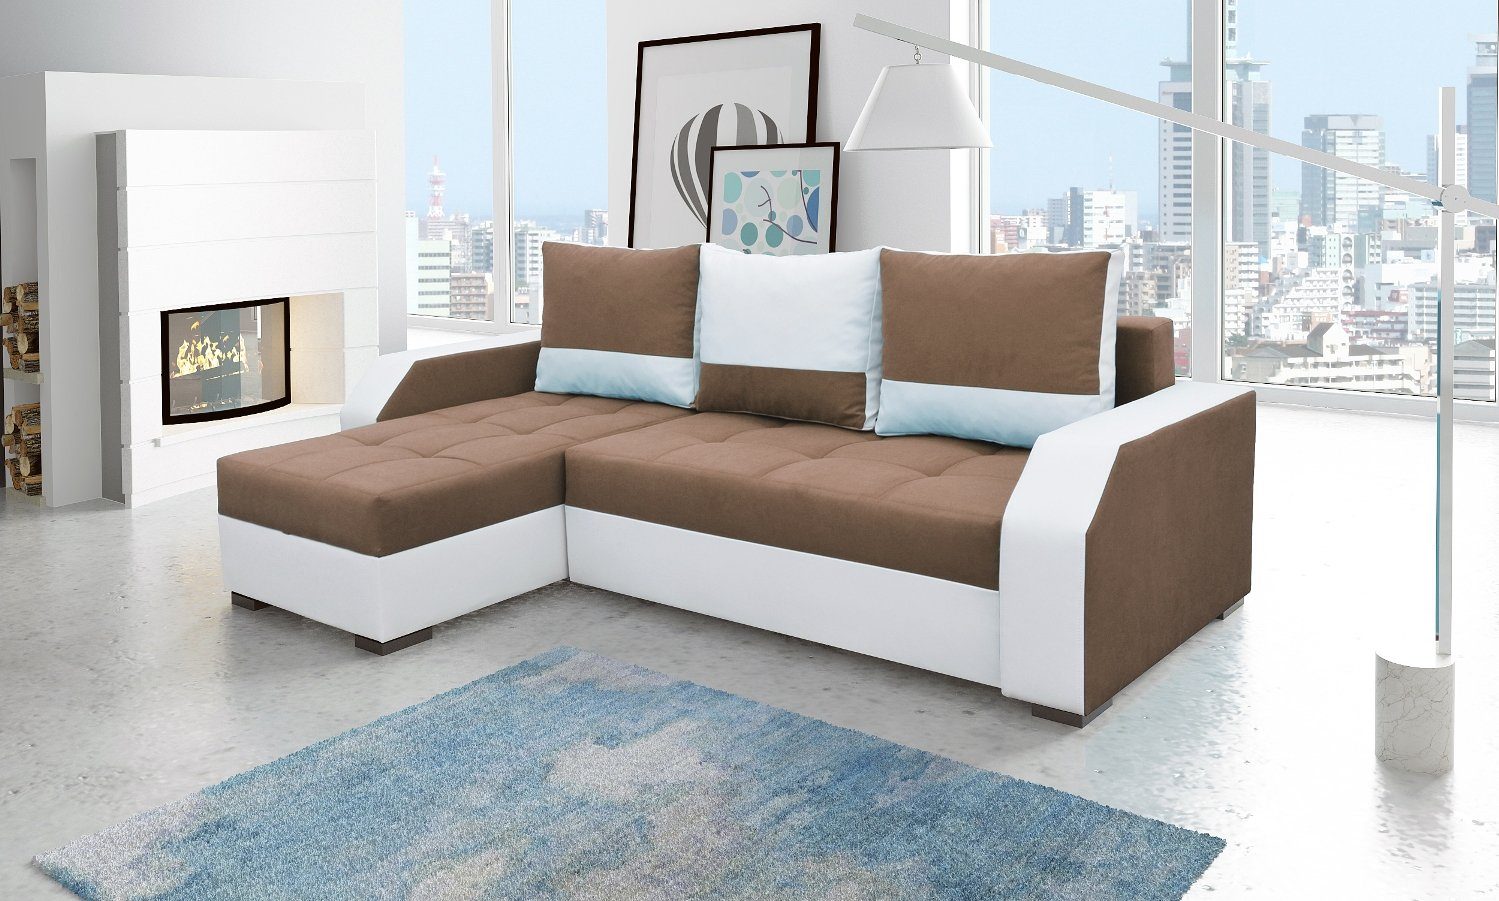 JVmoebel Ecksofa, Design Ecksofa Bettfunktion Couch Leder Textil Polster Sofas Couchen Hellgrau / Weiß